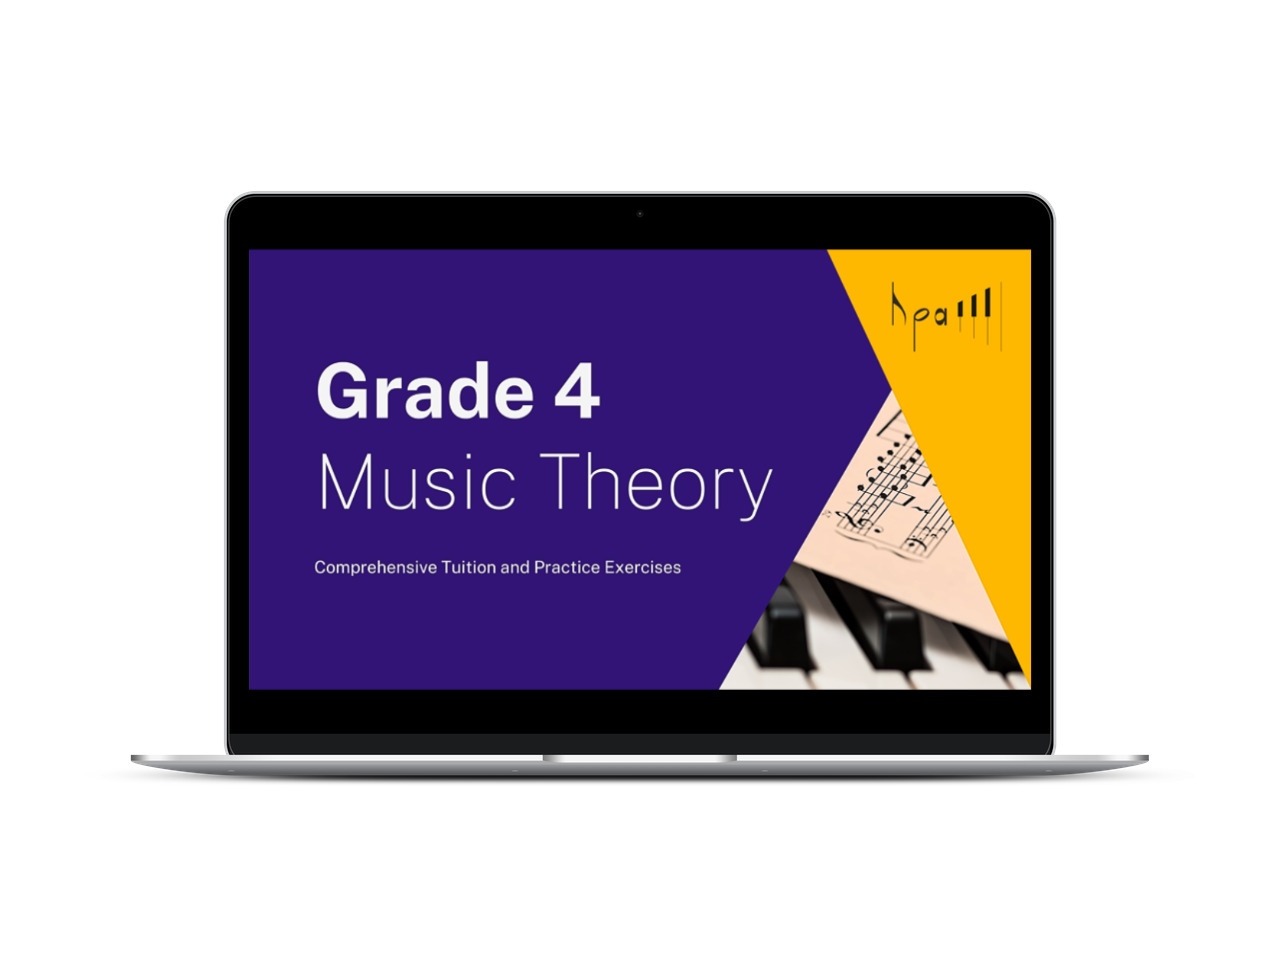 Grade 4 music theory course